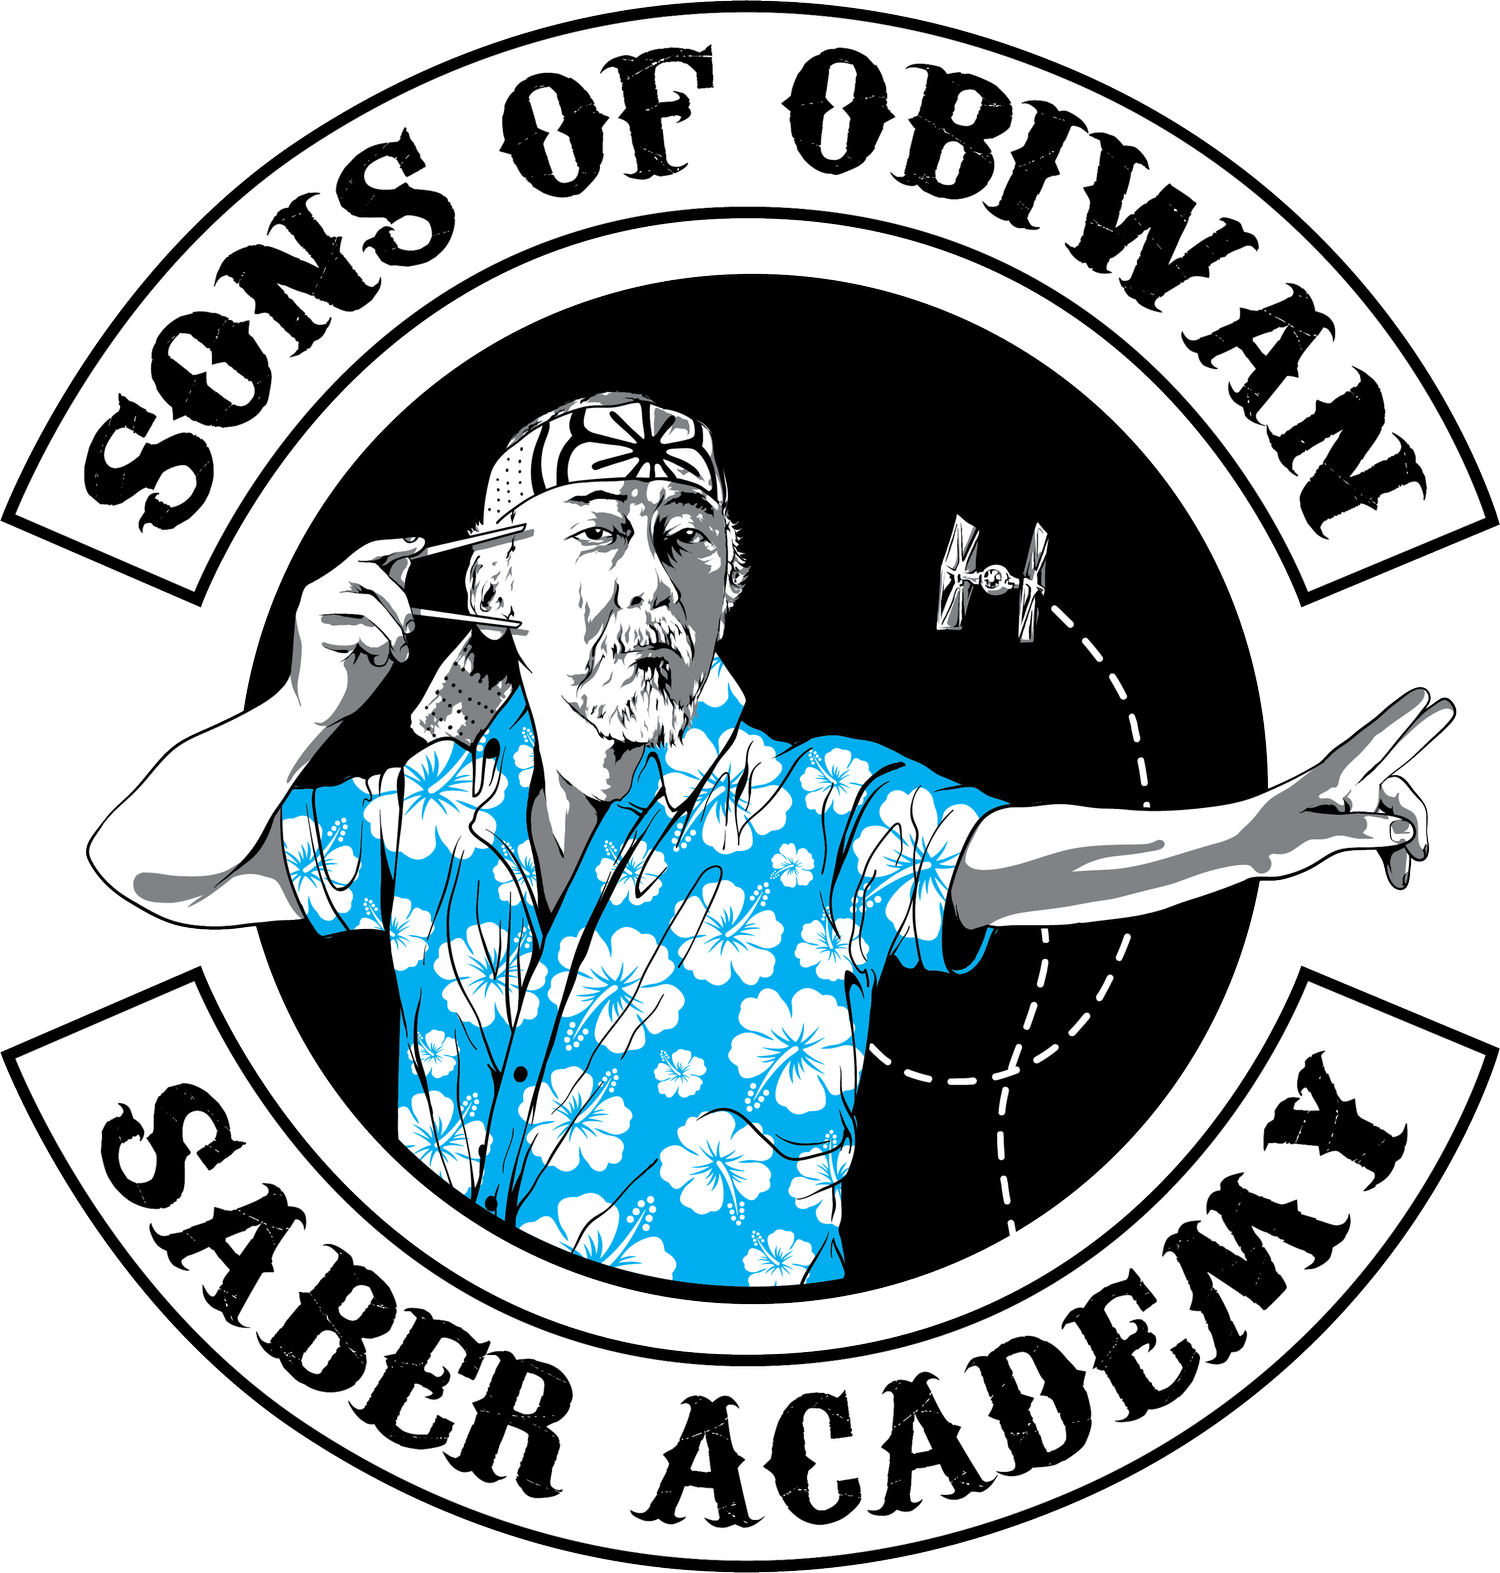 Sons of Obiwan Saber Academy